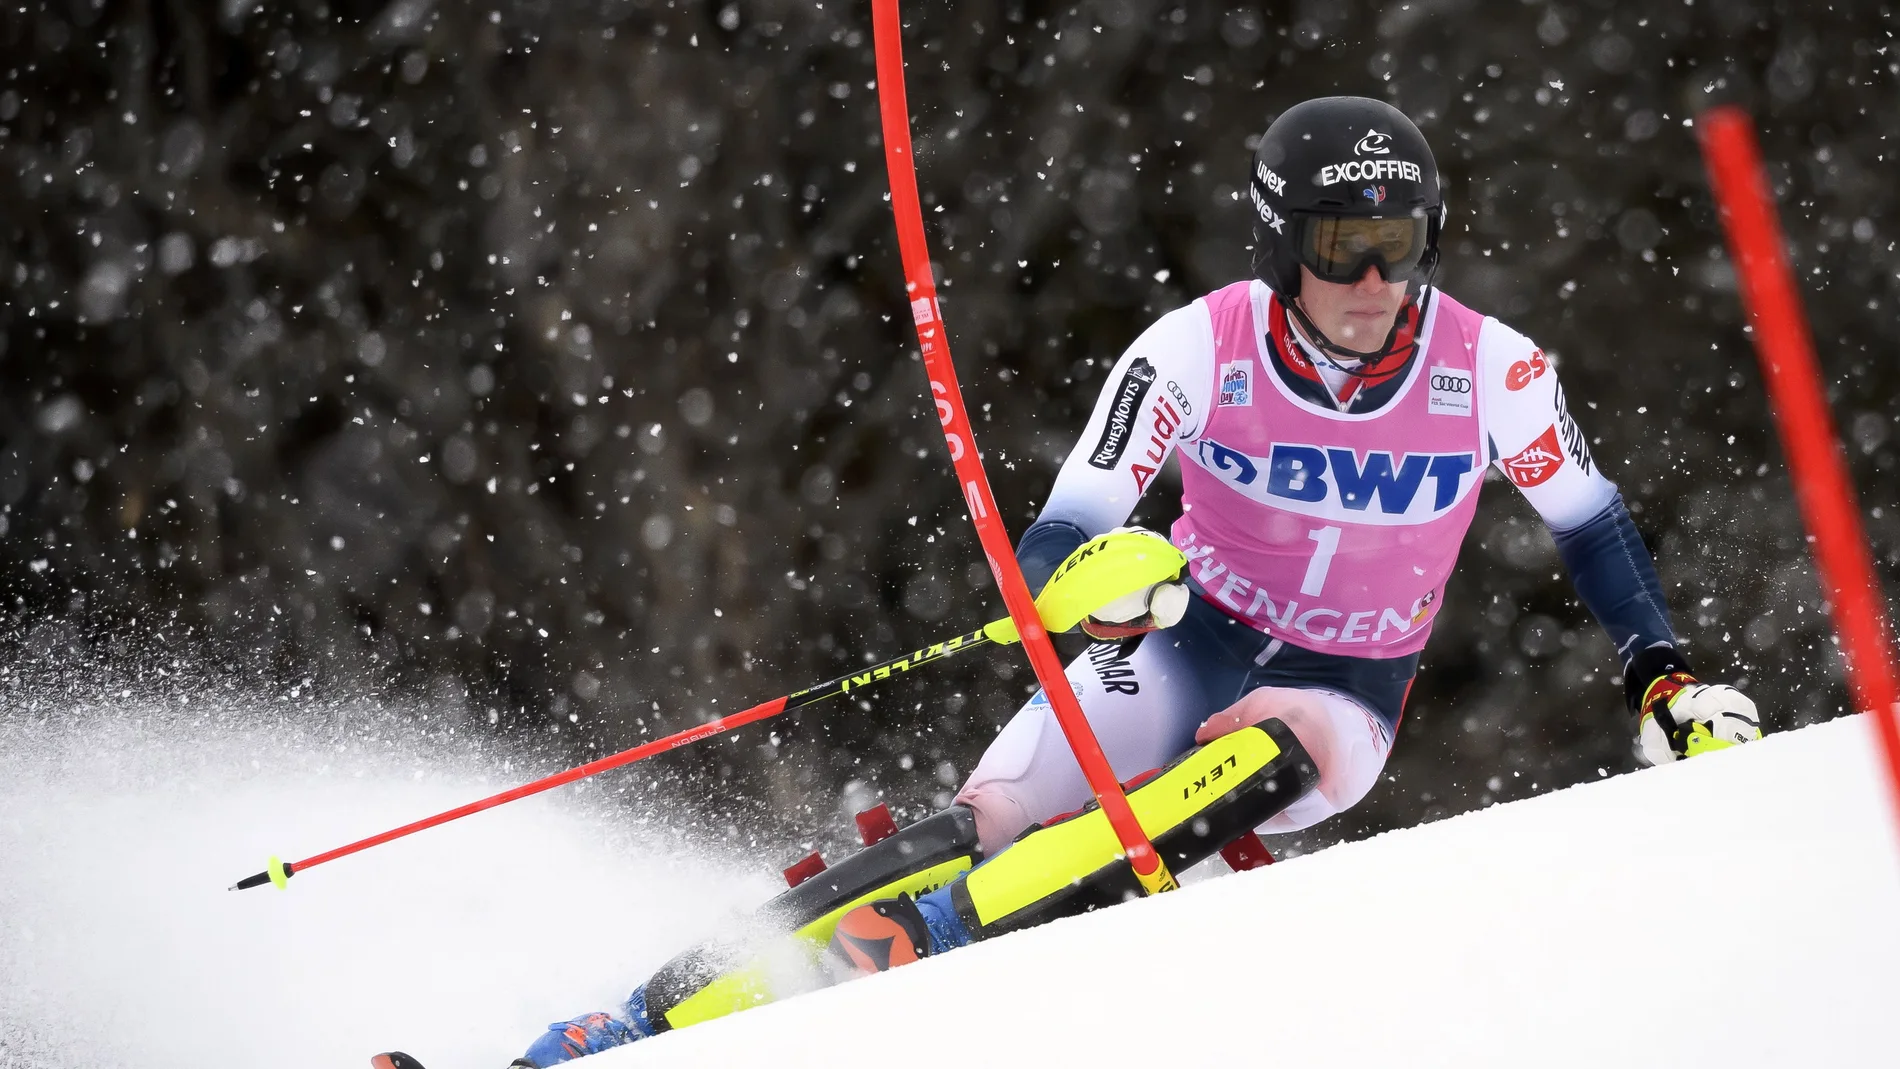 FIS Alpine Skiing World Cup in Wengen